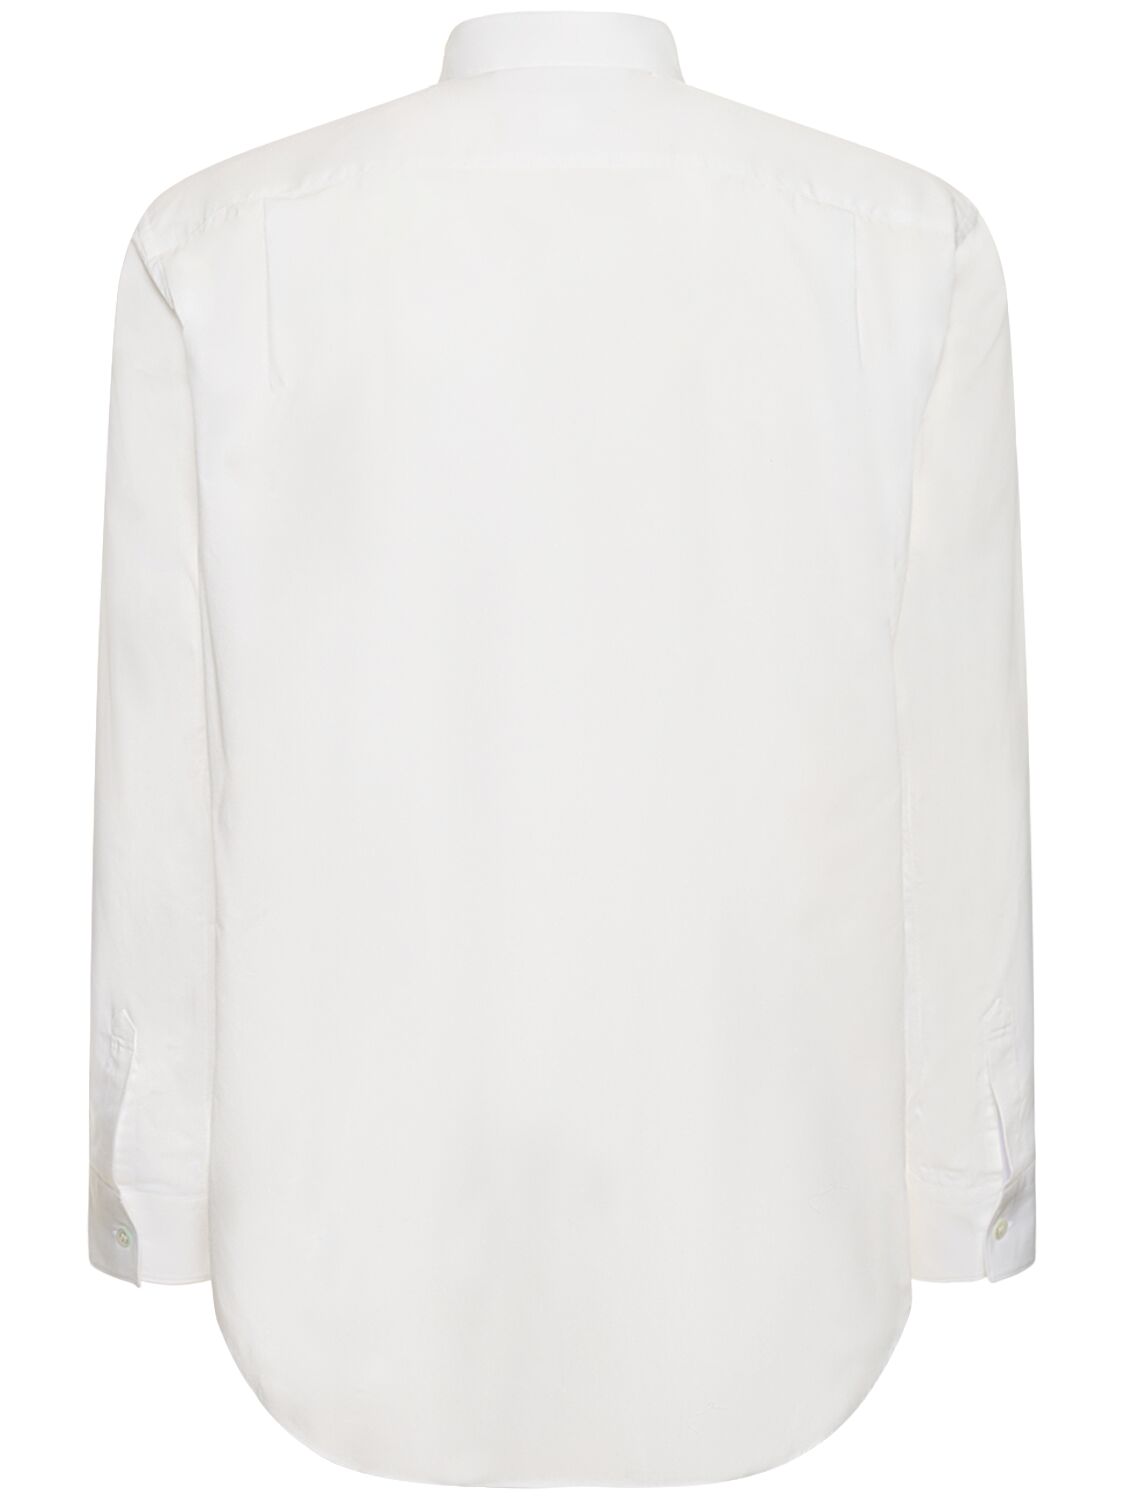 Lacoste Printed Cotton Poplin Shirt